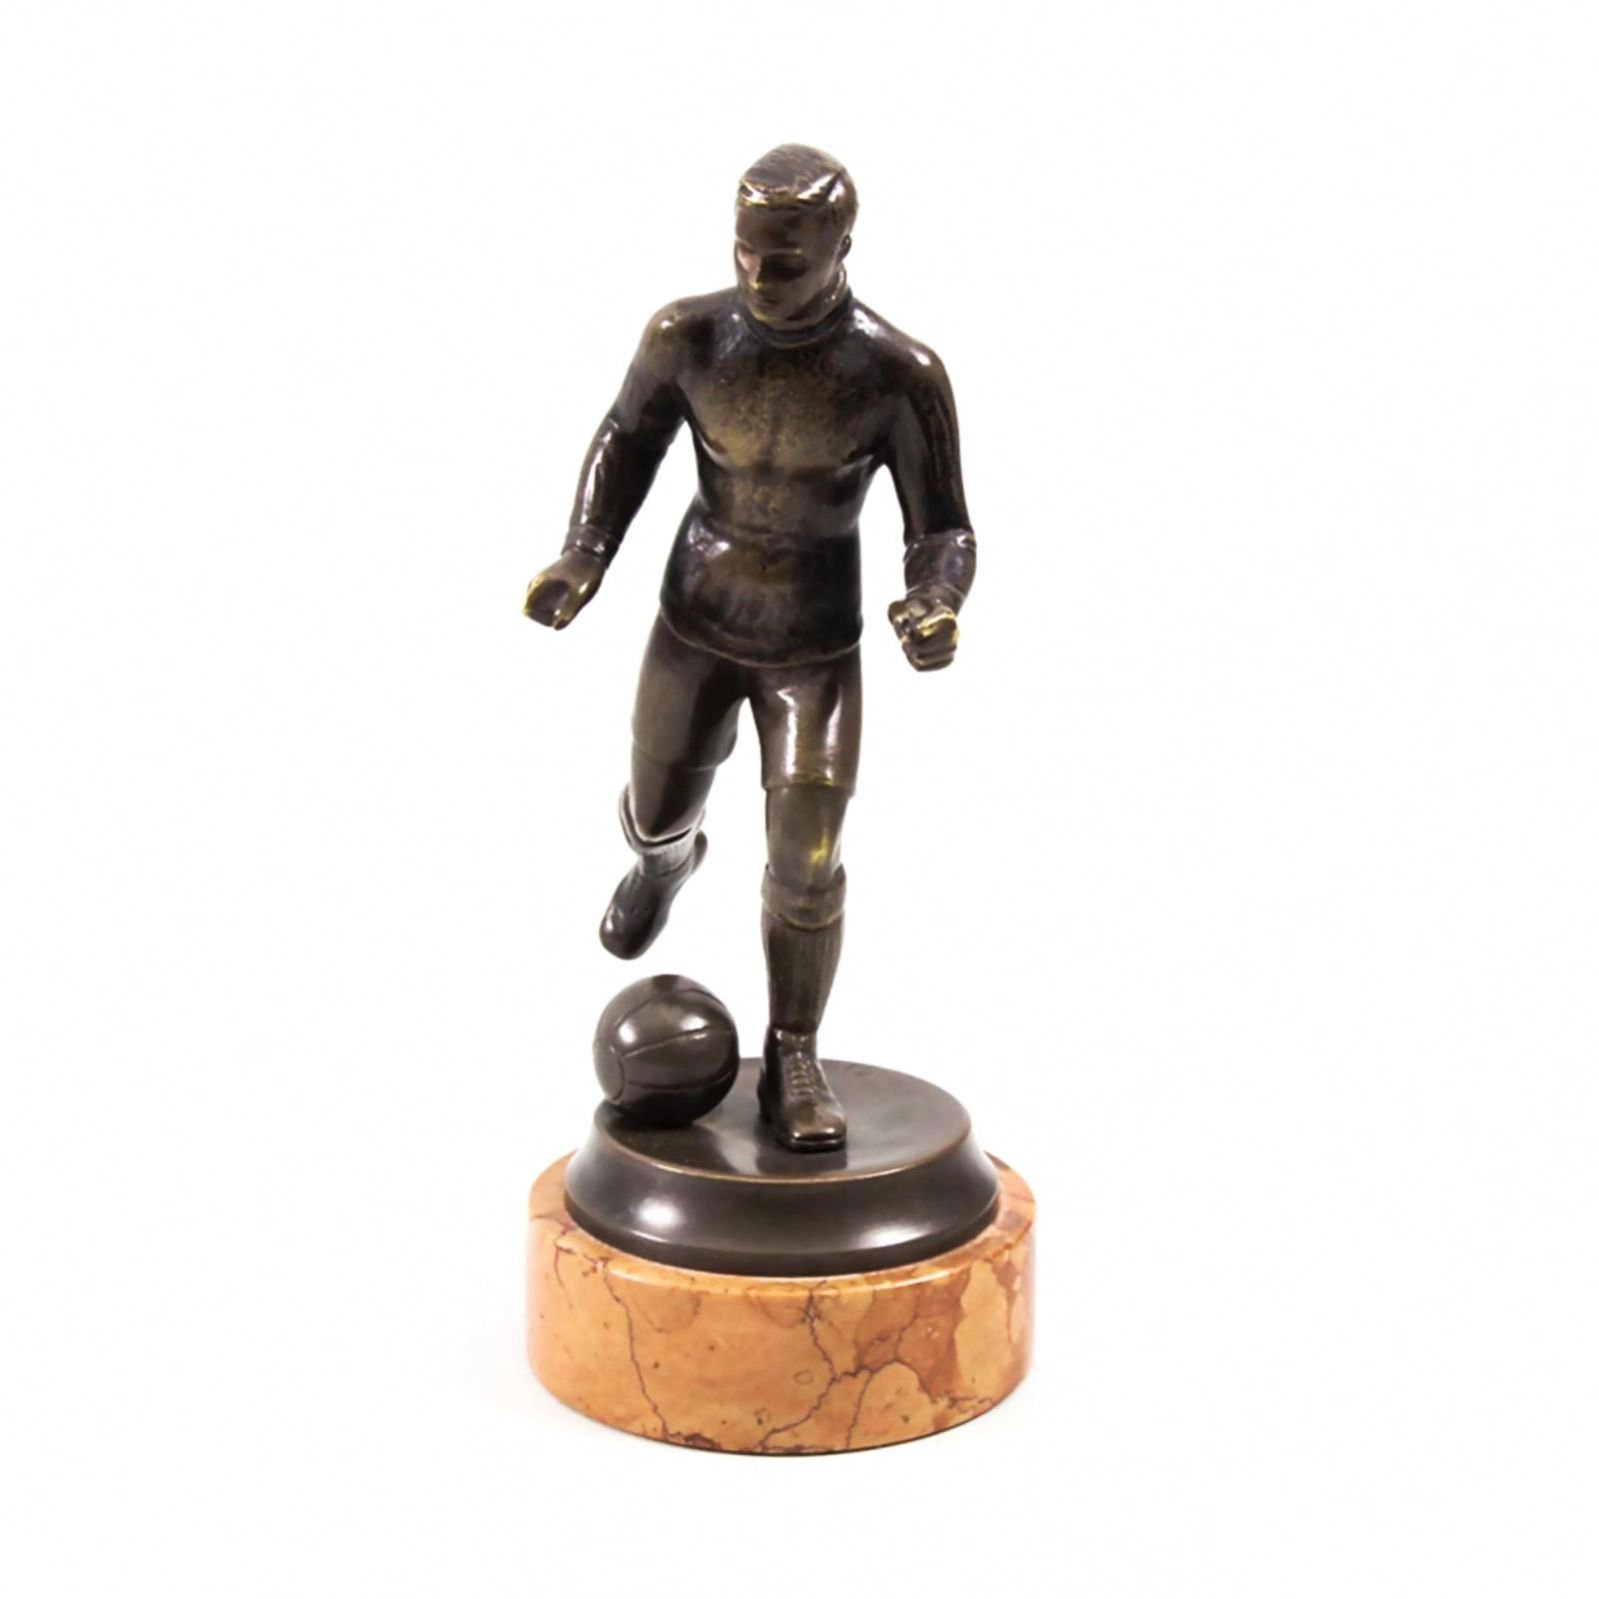 Football-Player-bronze-figure-by-Bruno-Zach-1891-1945